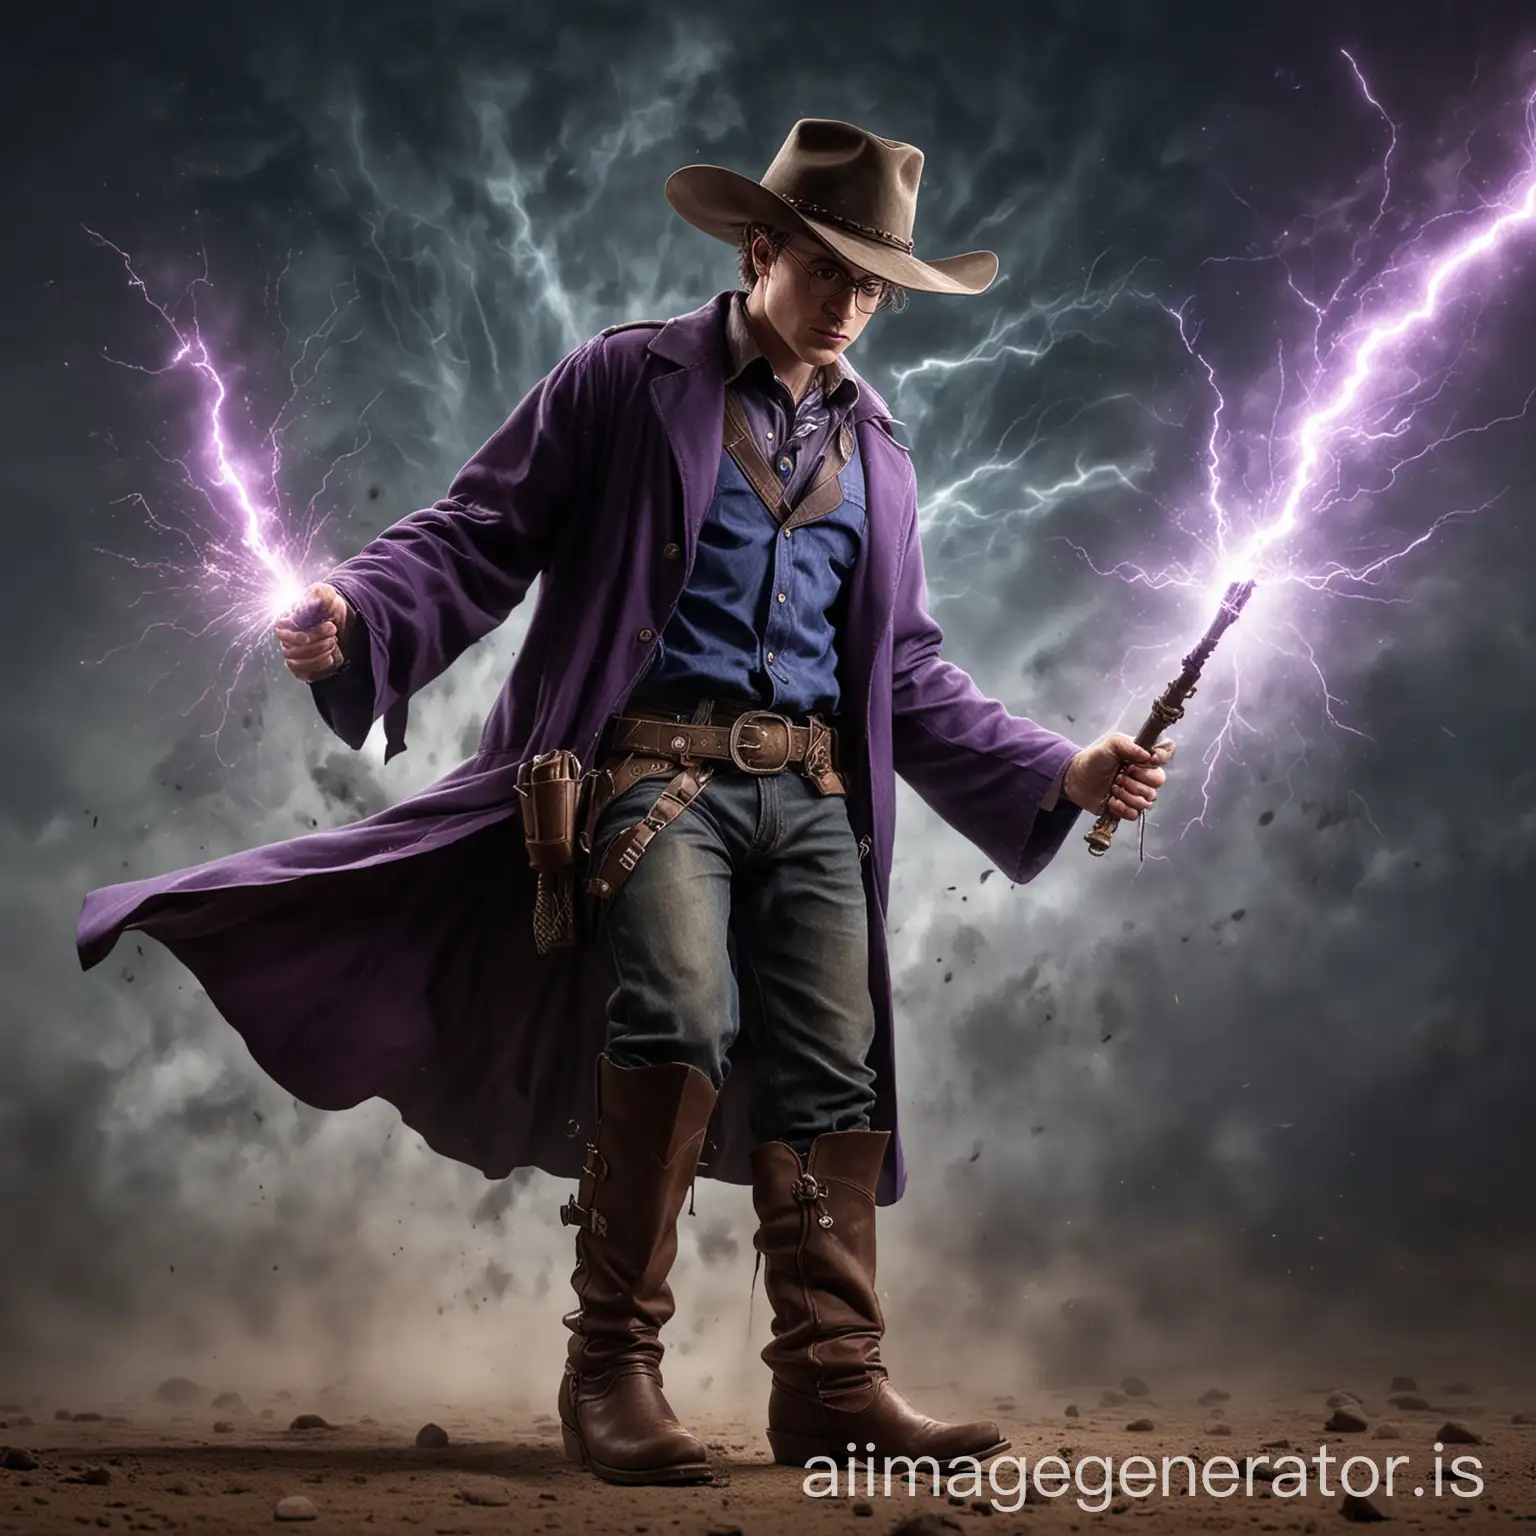 Texan-Cowboy-Harry-Potter-Casting-Magical-Lightning-Spell